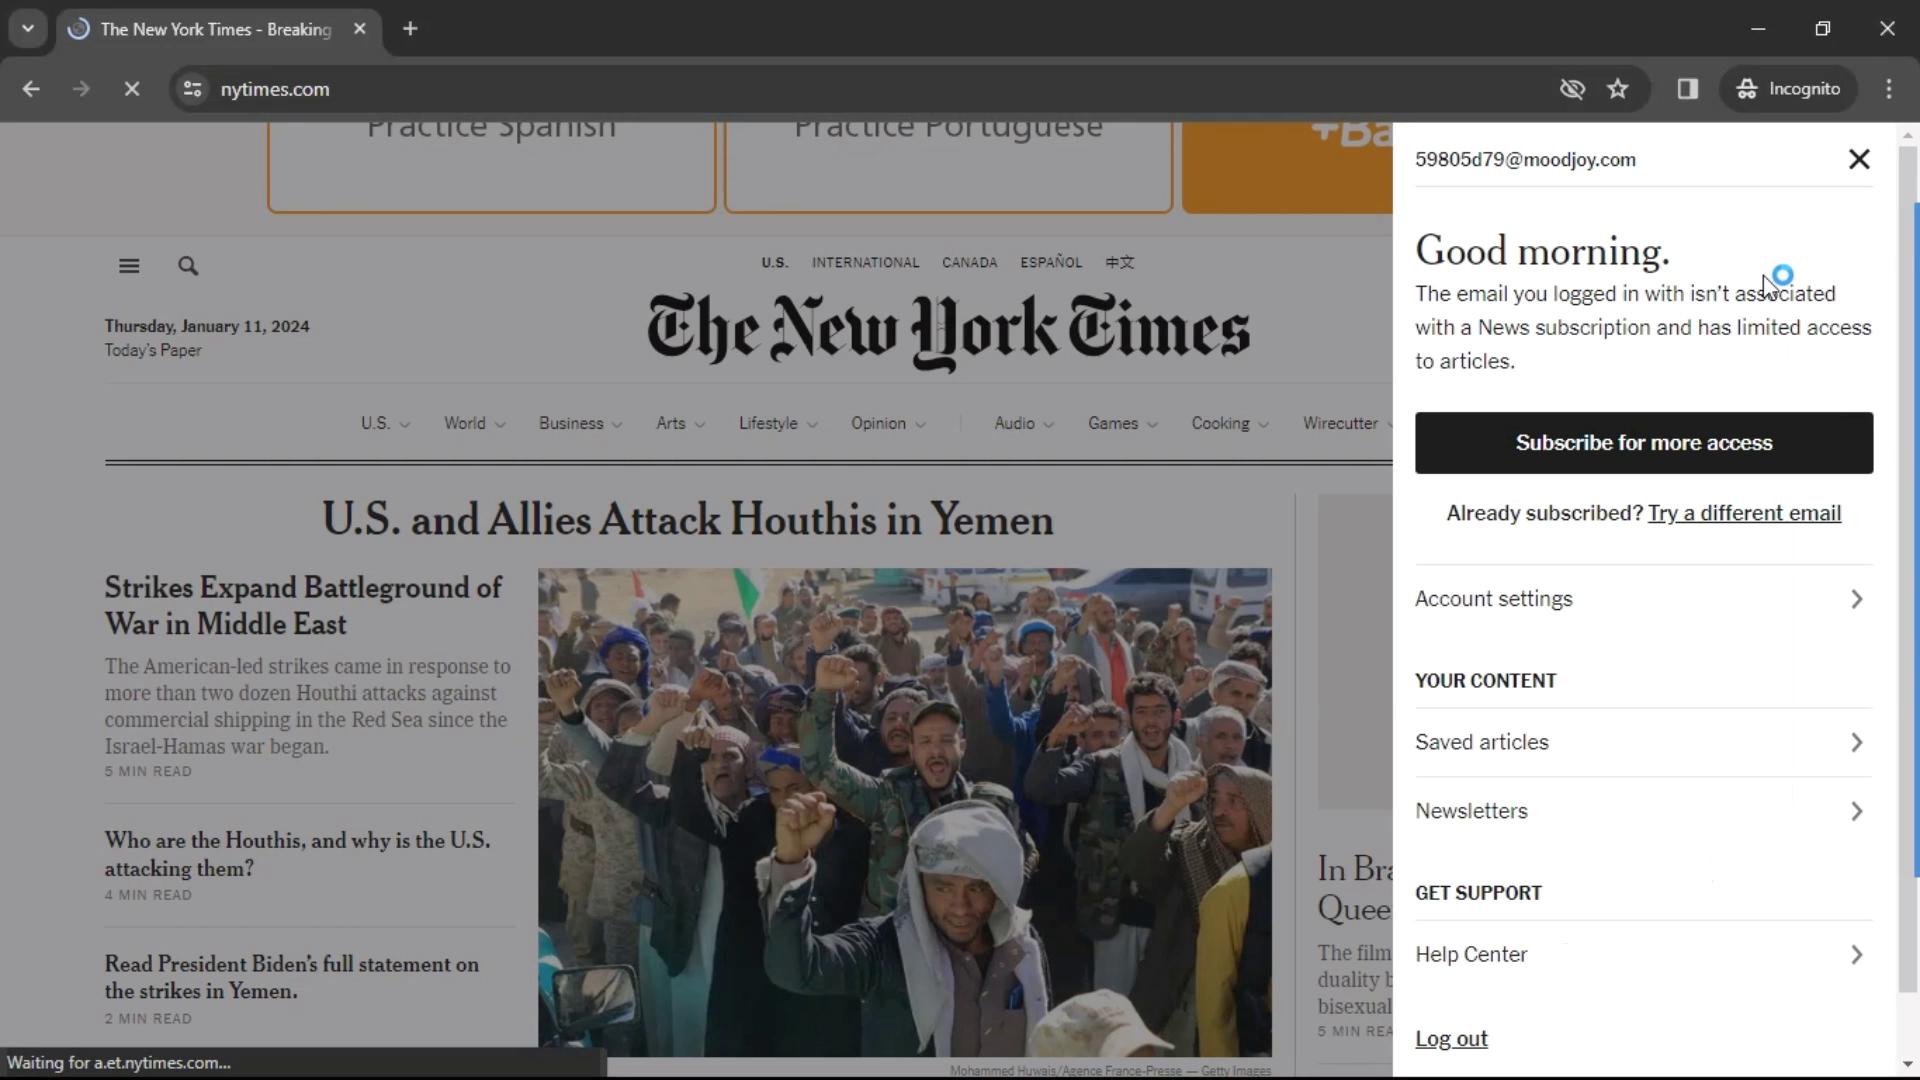 Help center on The New York Times video screenshot